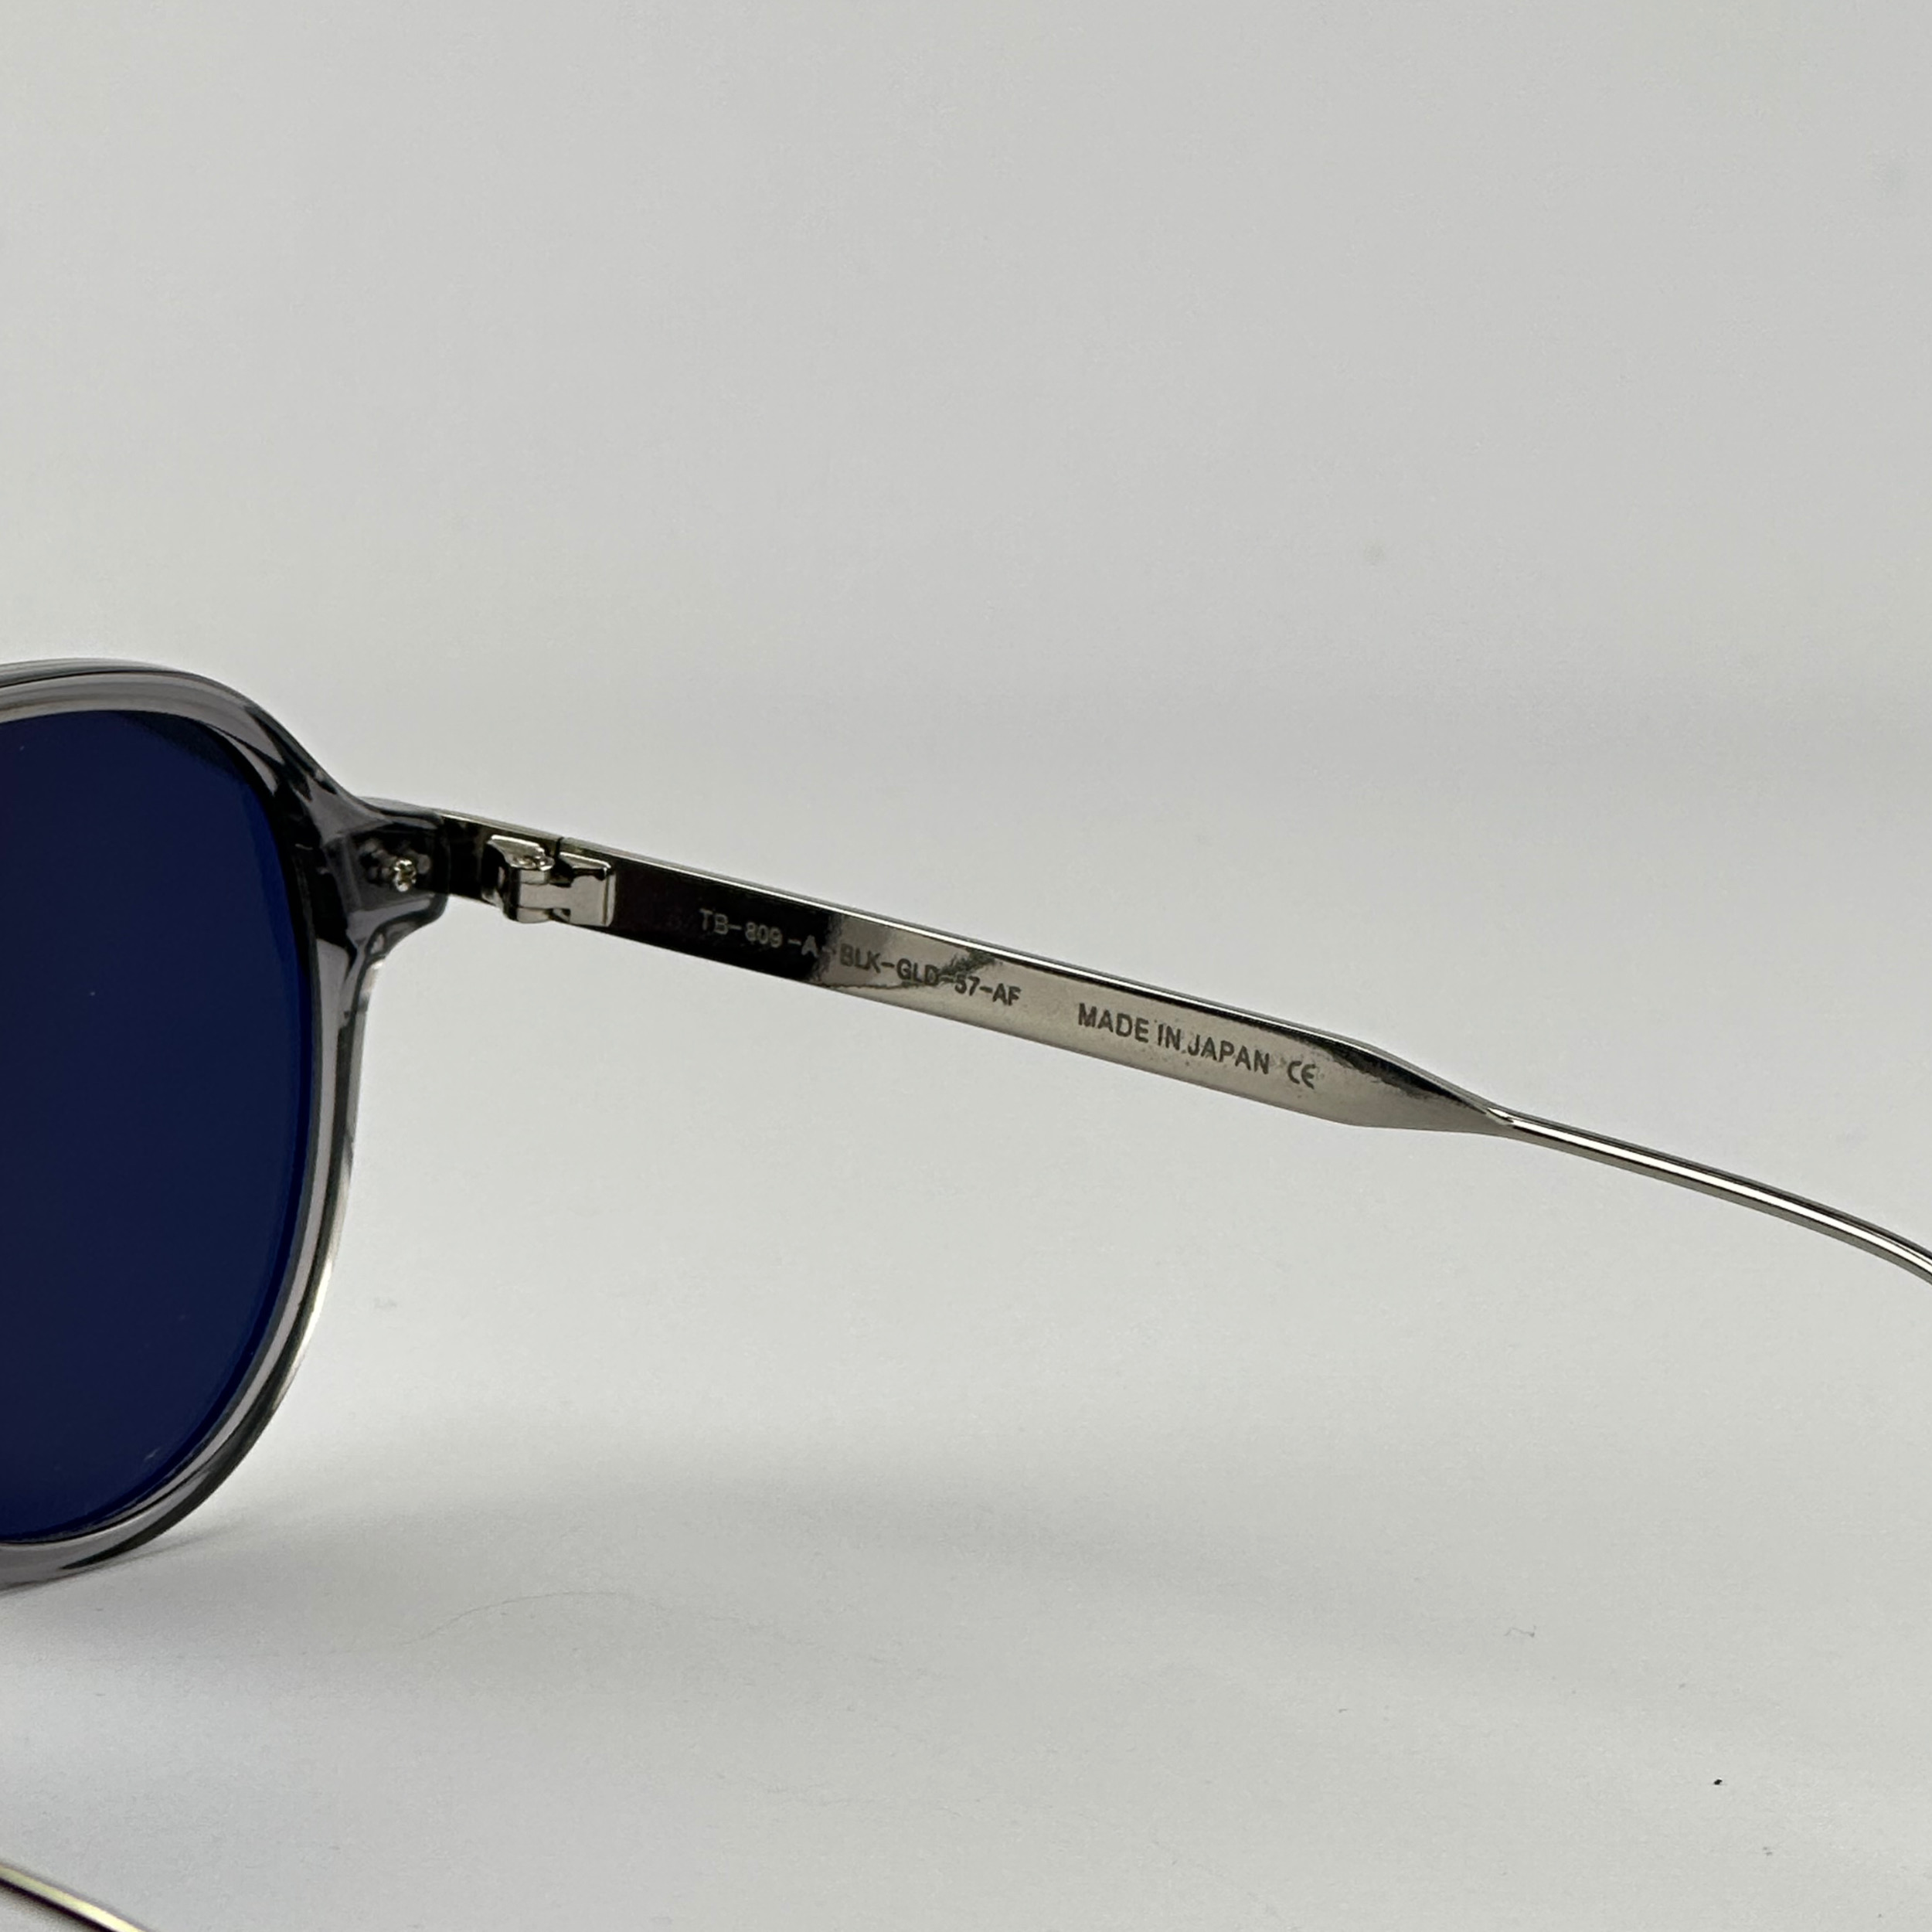 عینک آفتابی تام براون مدل TB-809-A-BLK-GLD-57-AF -  - 11